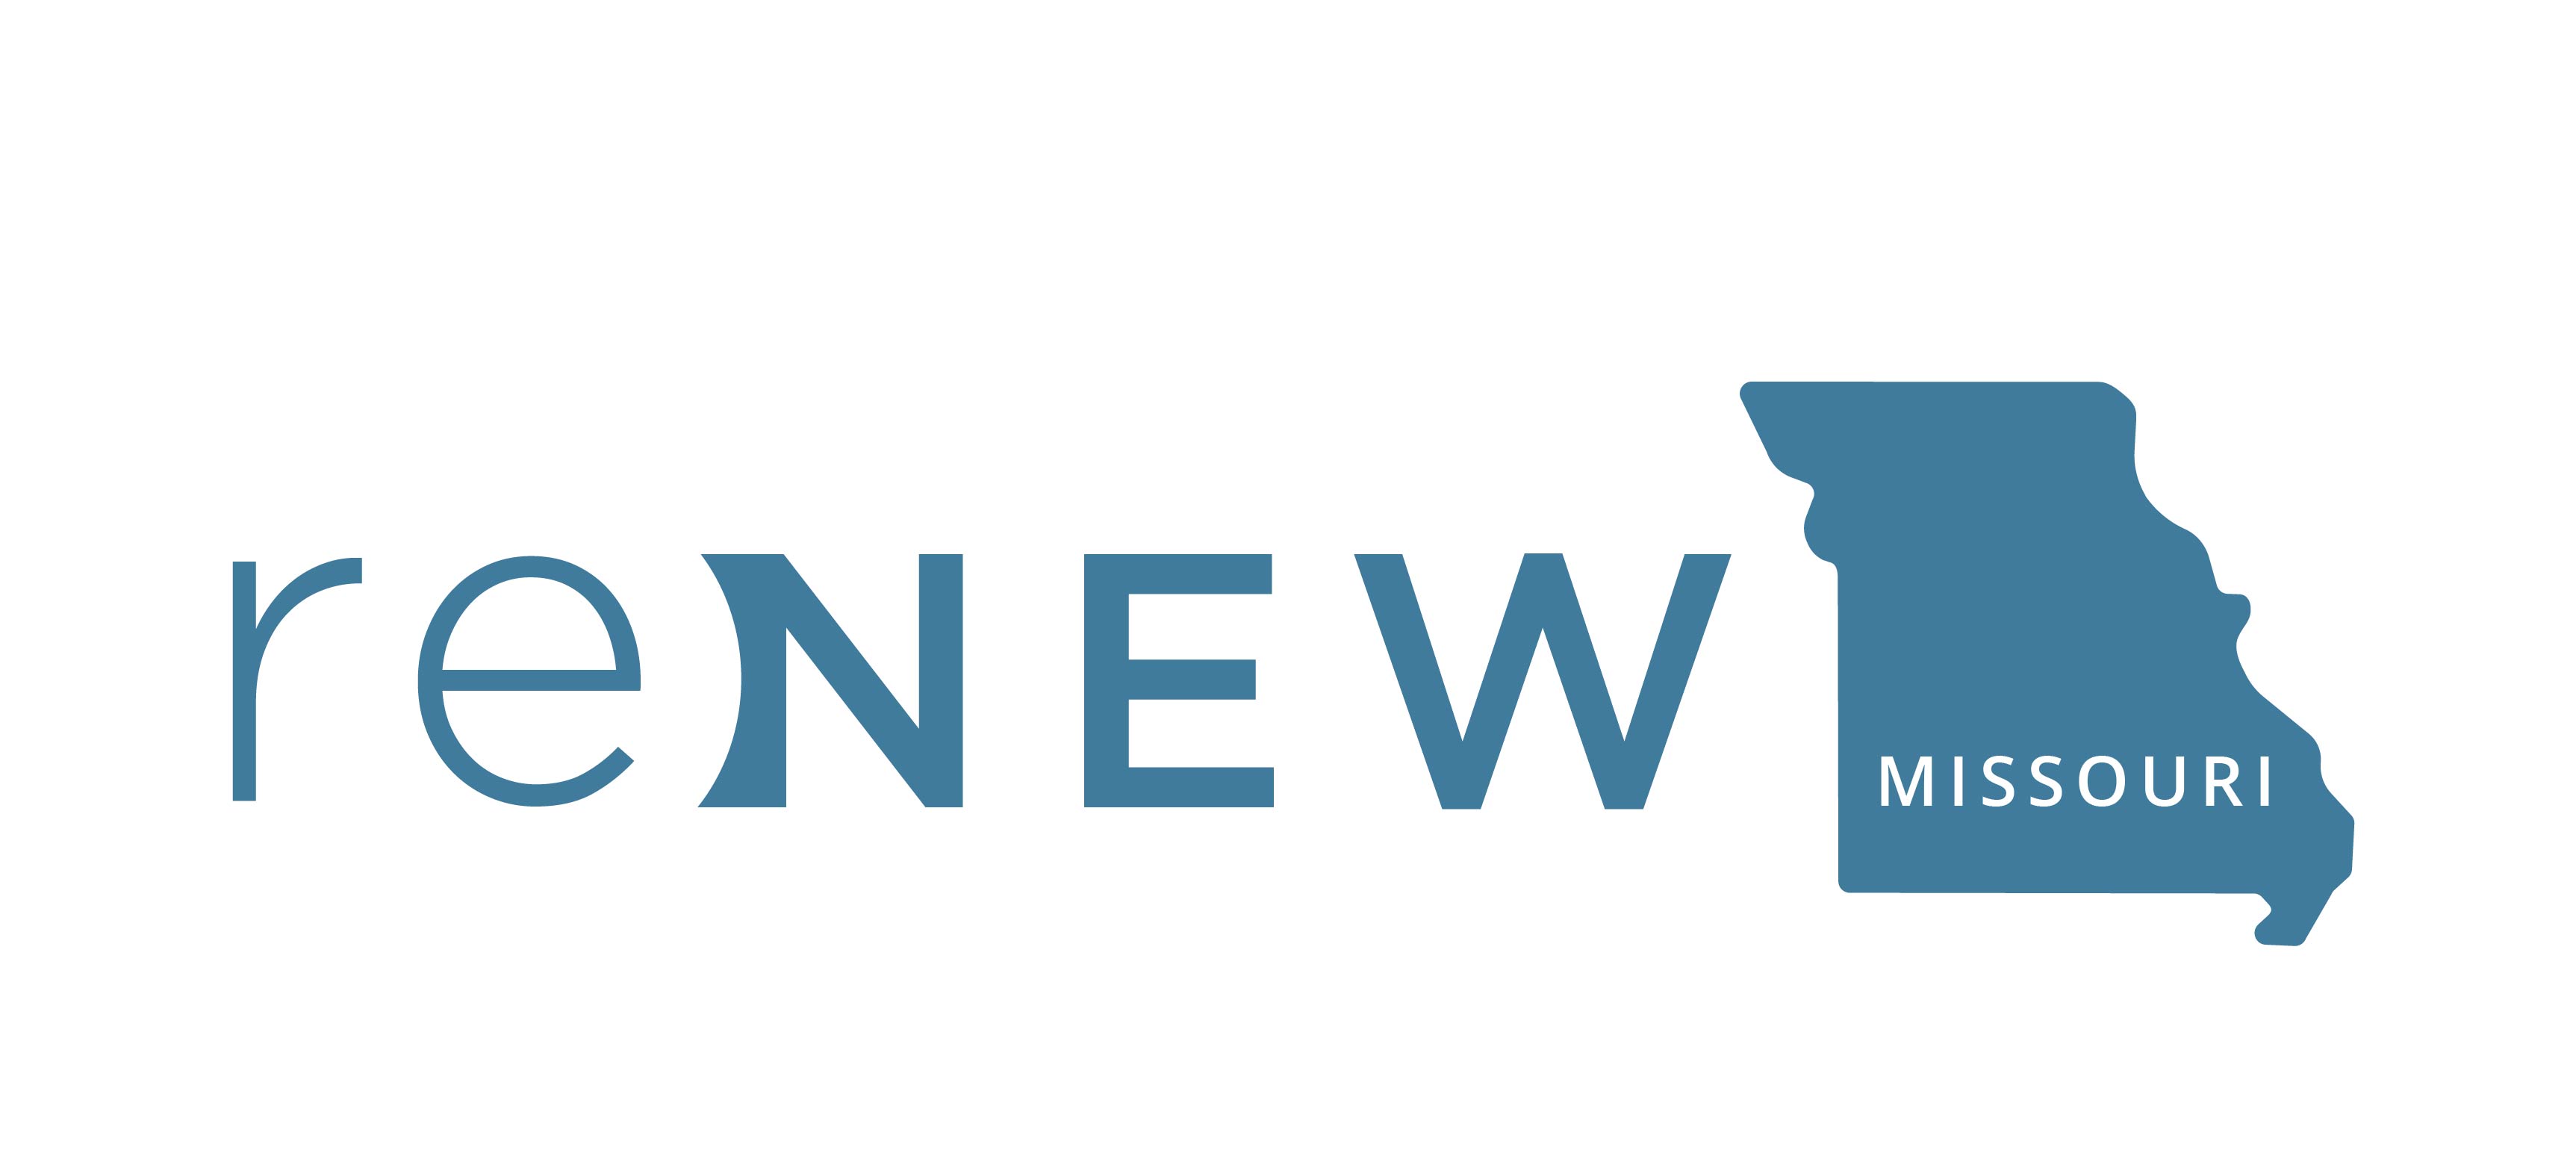 Renew Missouri logo